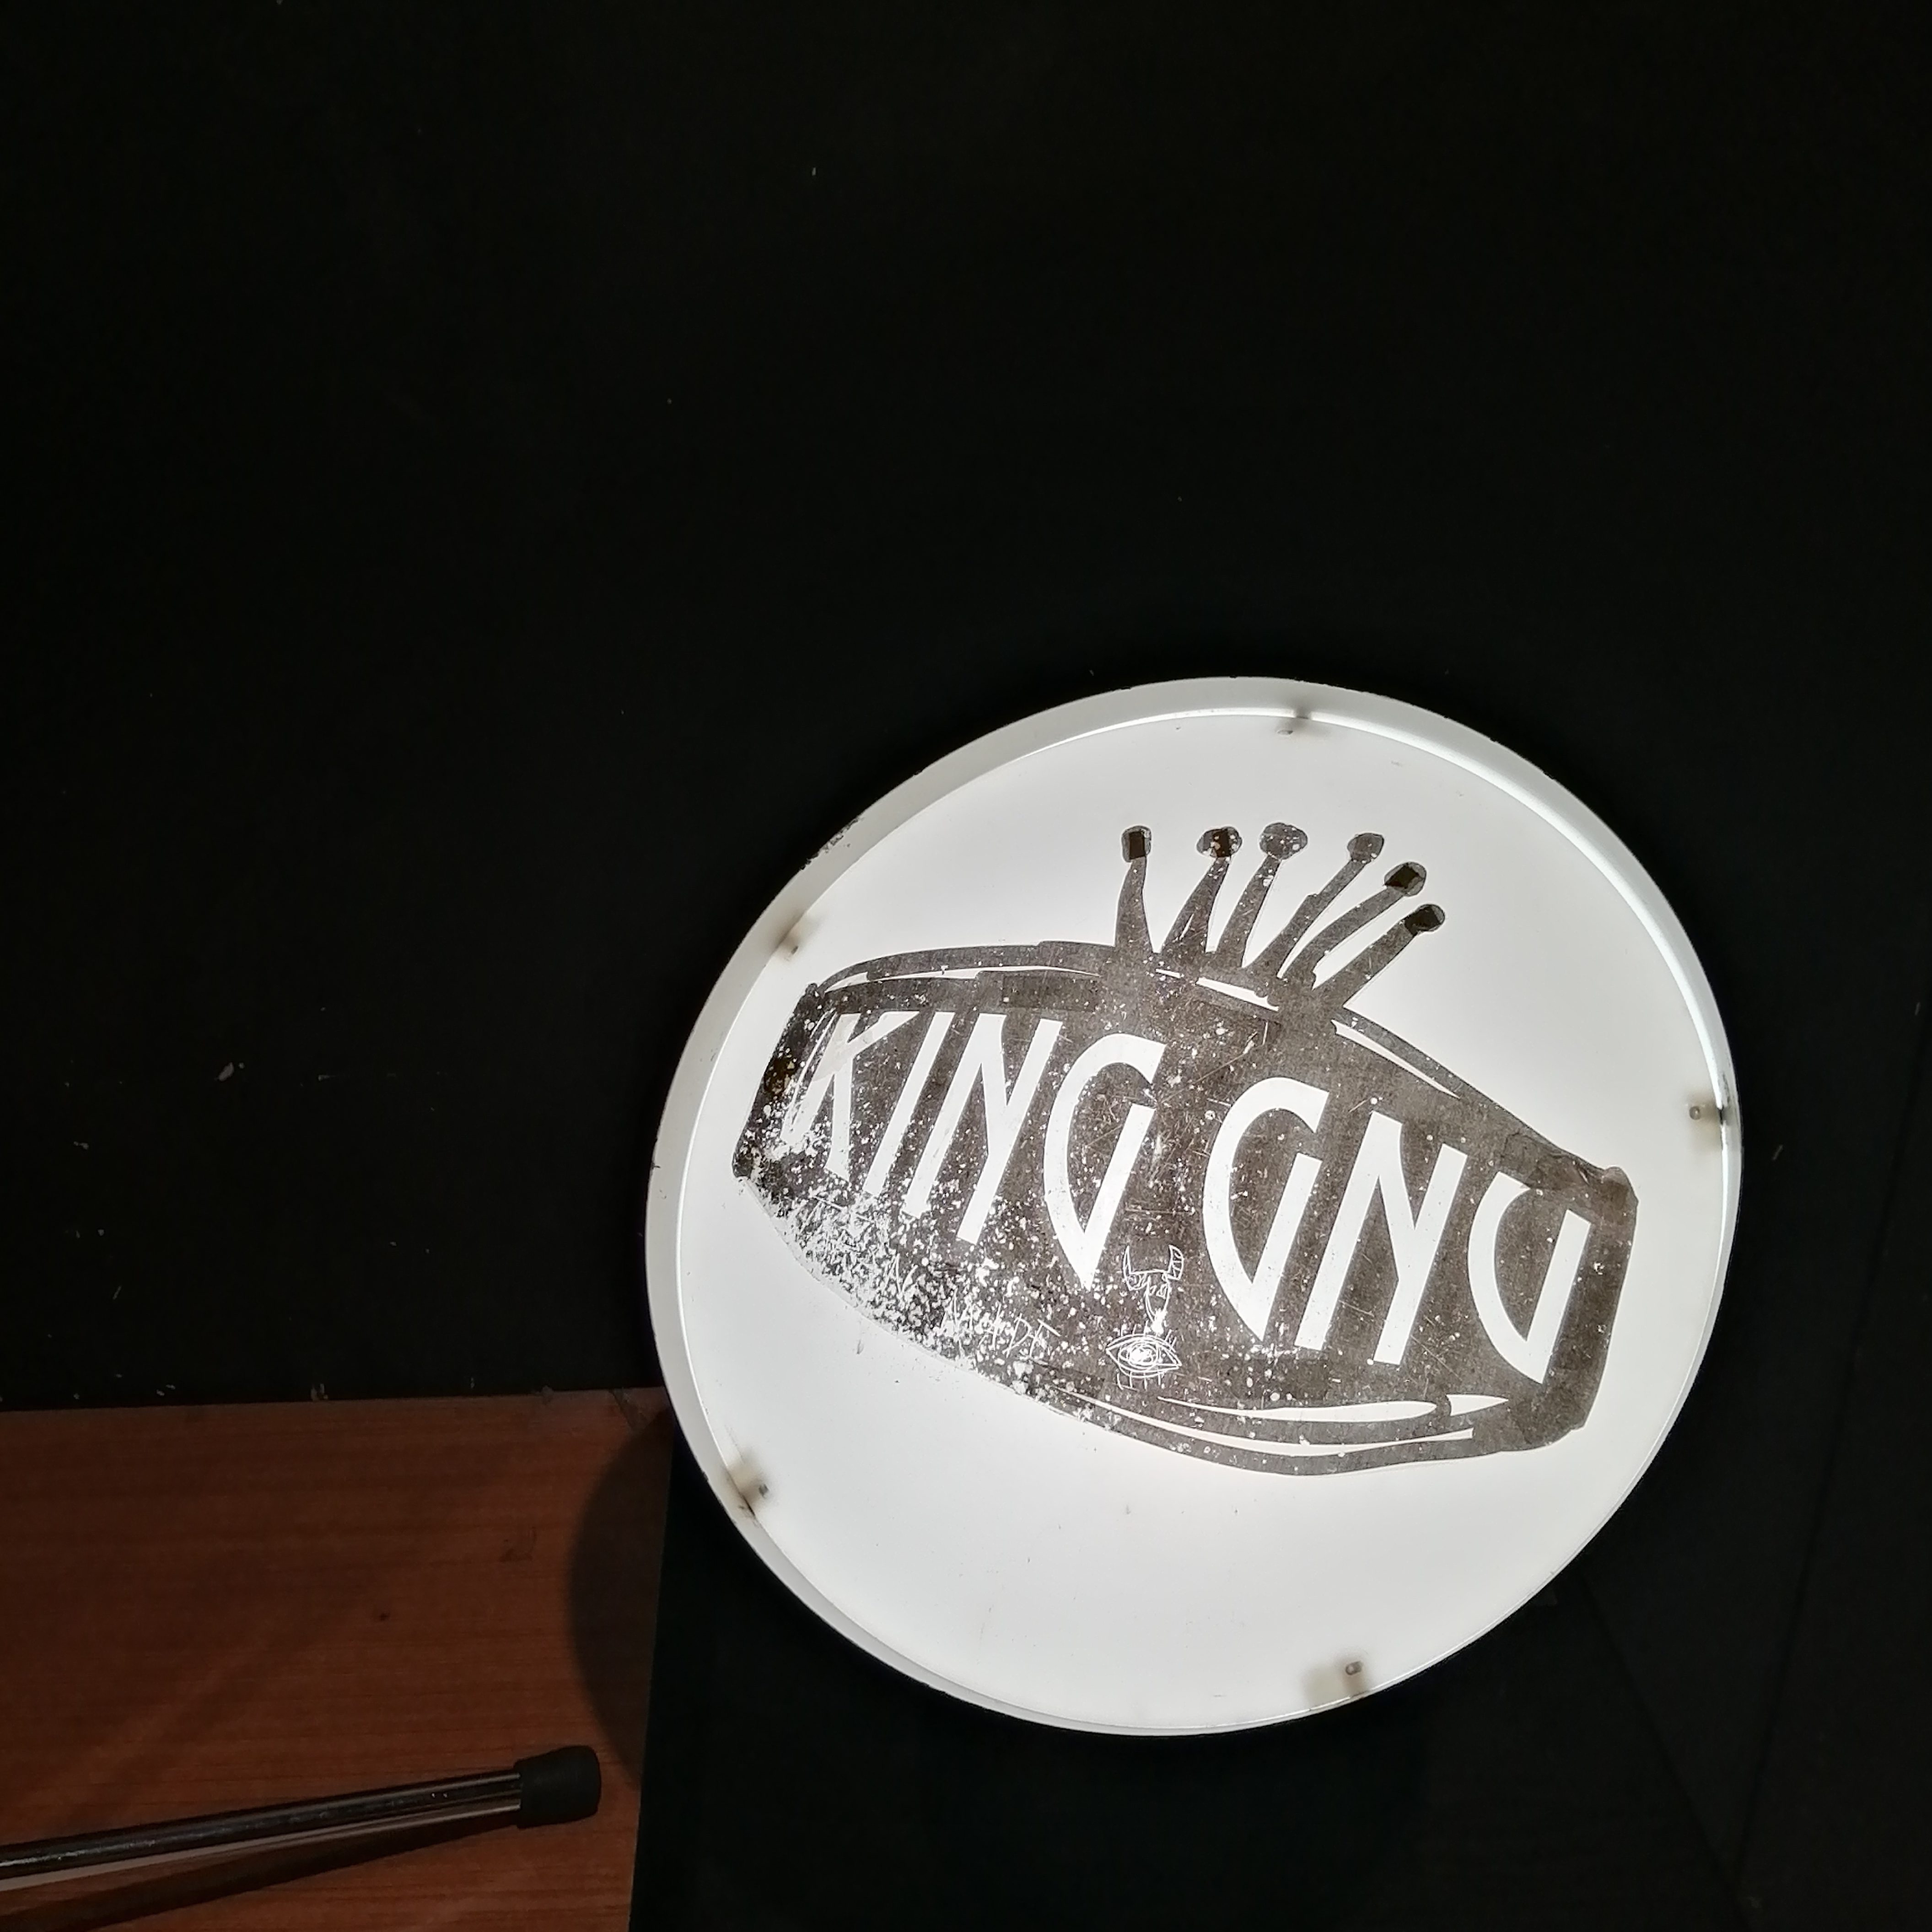 King Gnu Live Tour 19 Aw 参戦レポ ポテサラタイム